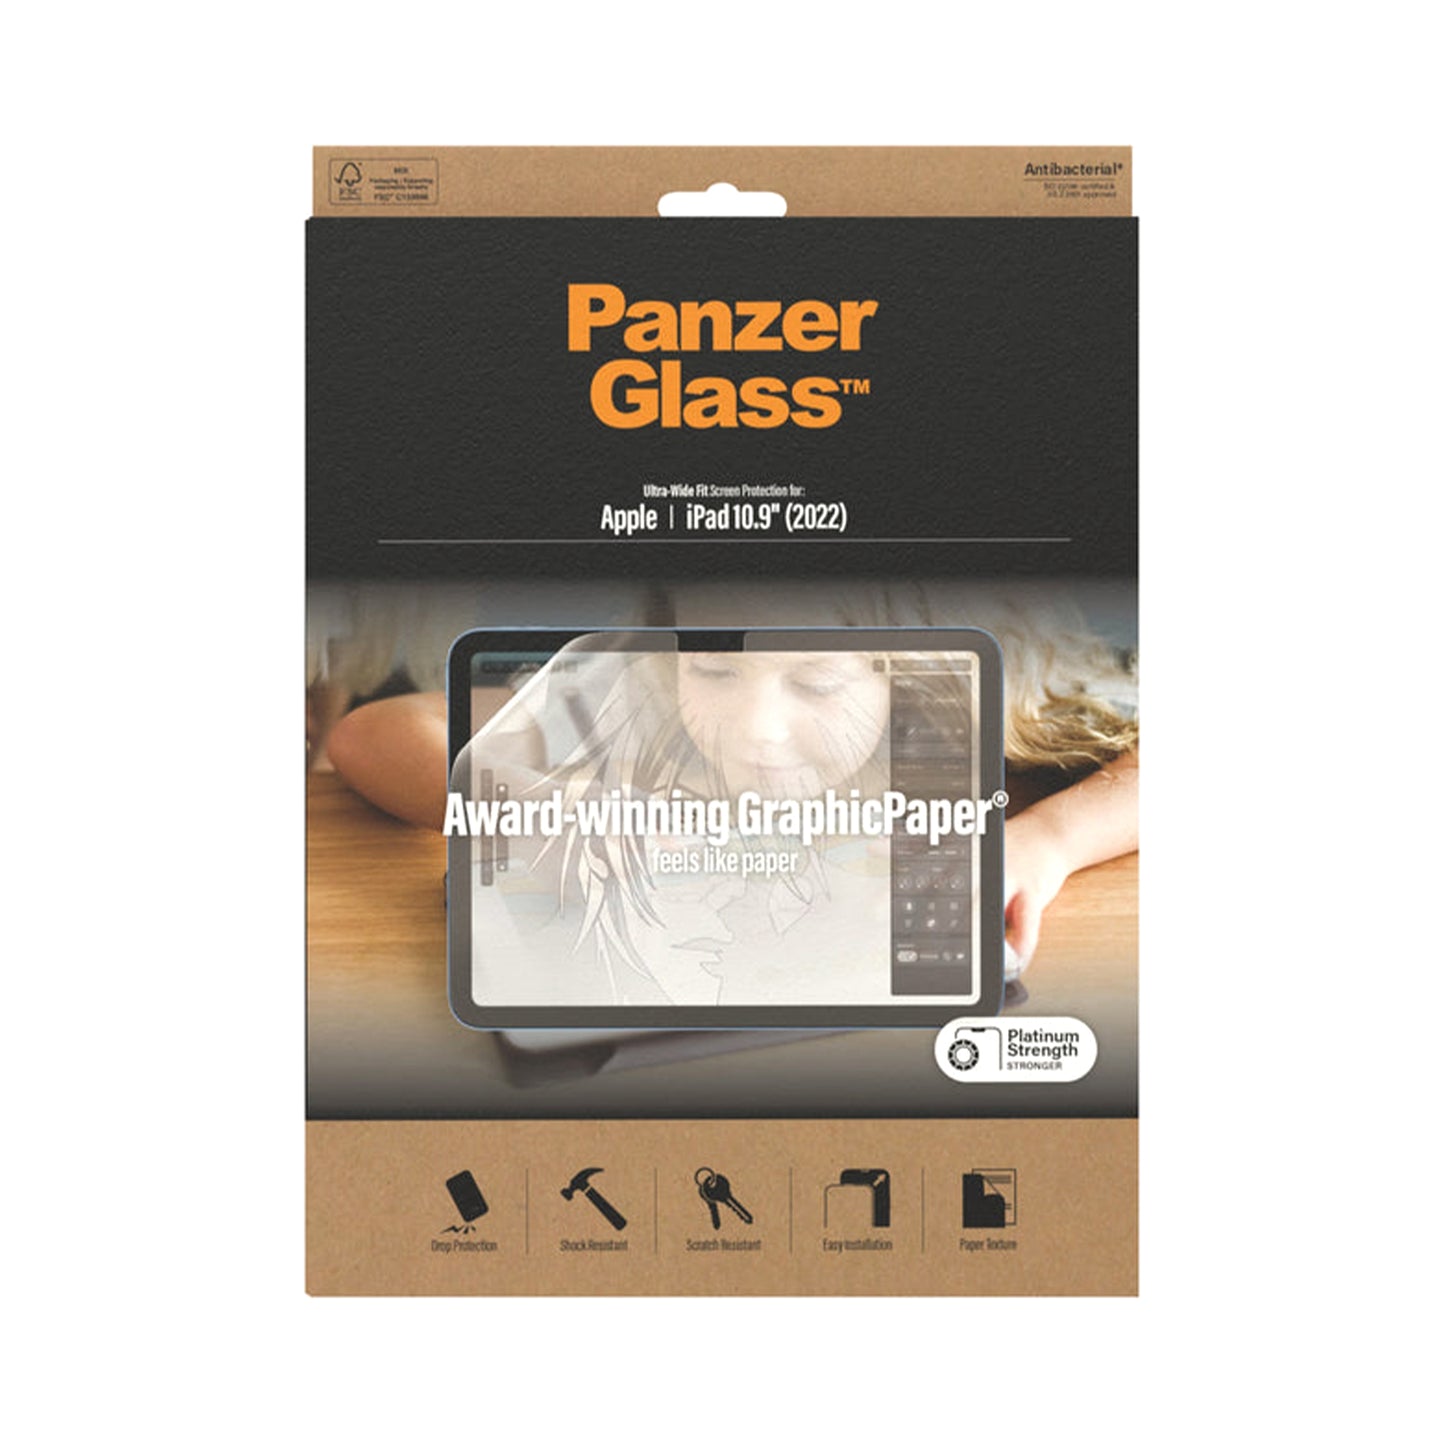 PANZERGLASS GraphicPaper for iPad 10th Gen (2022)